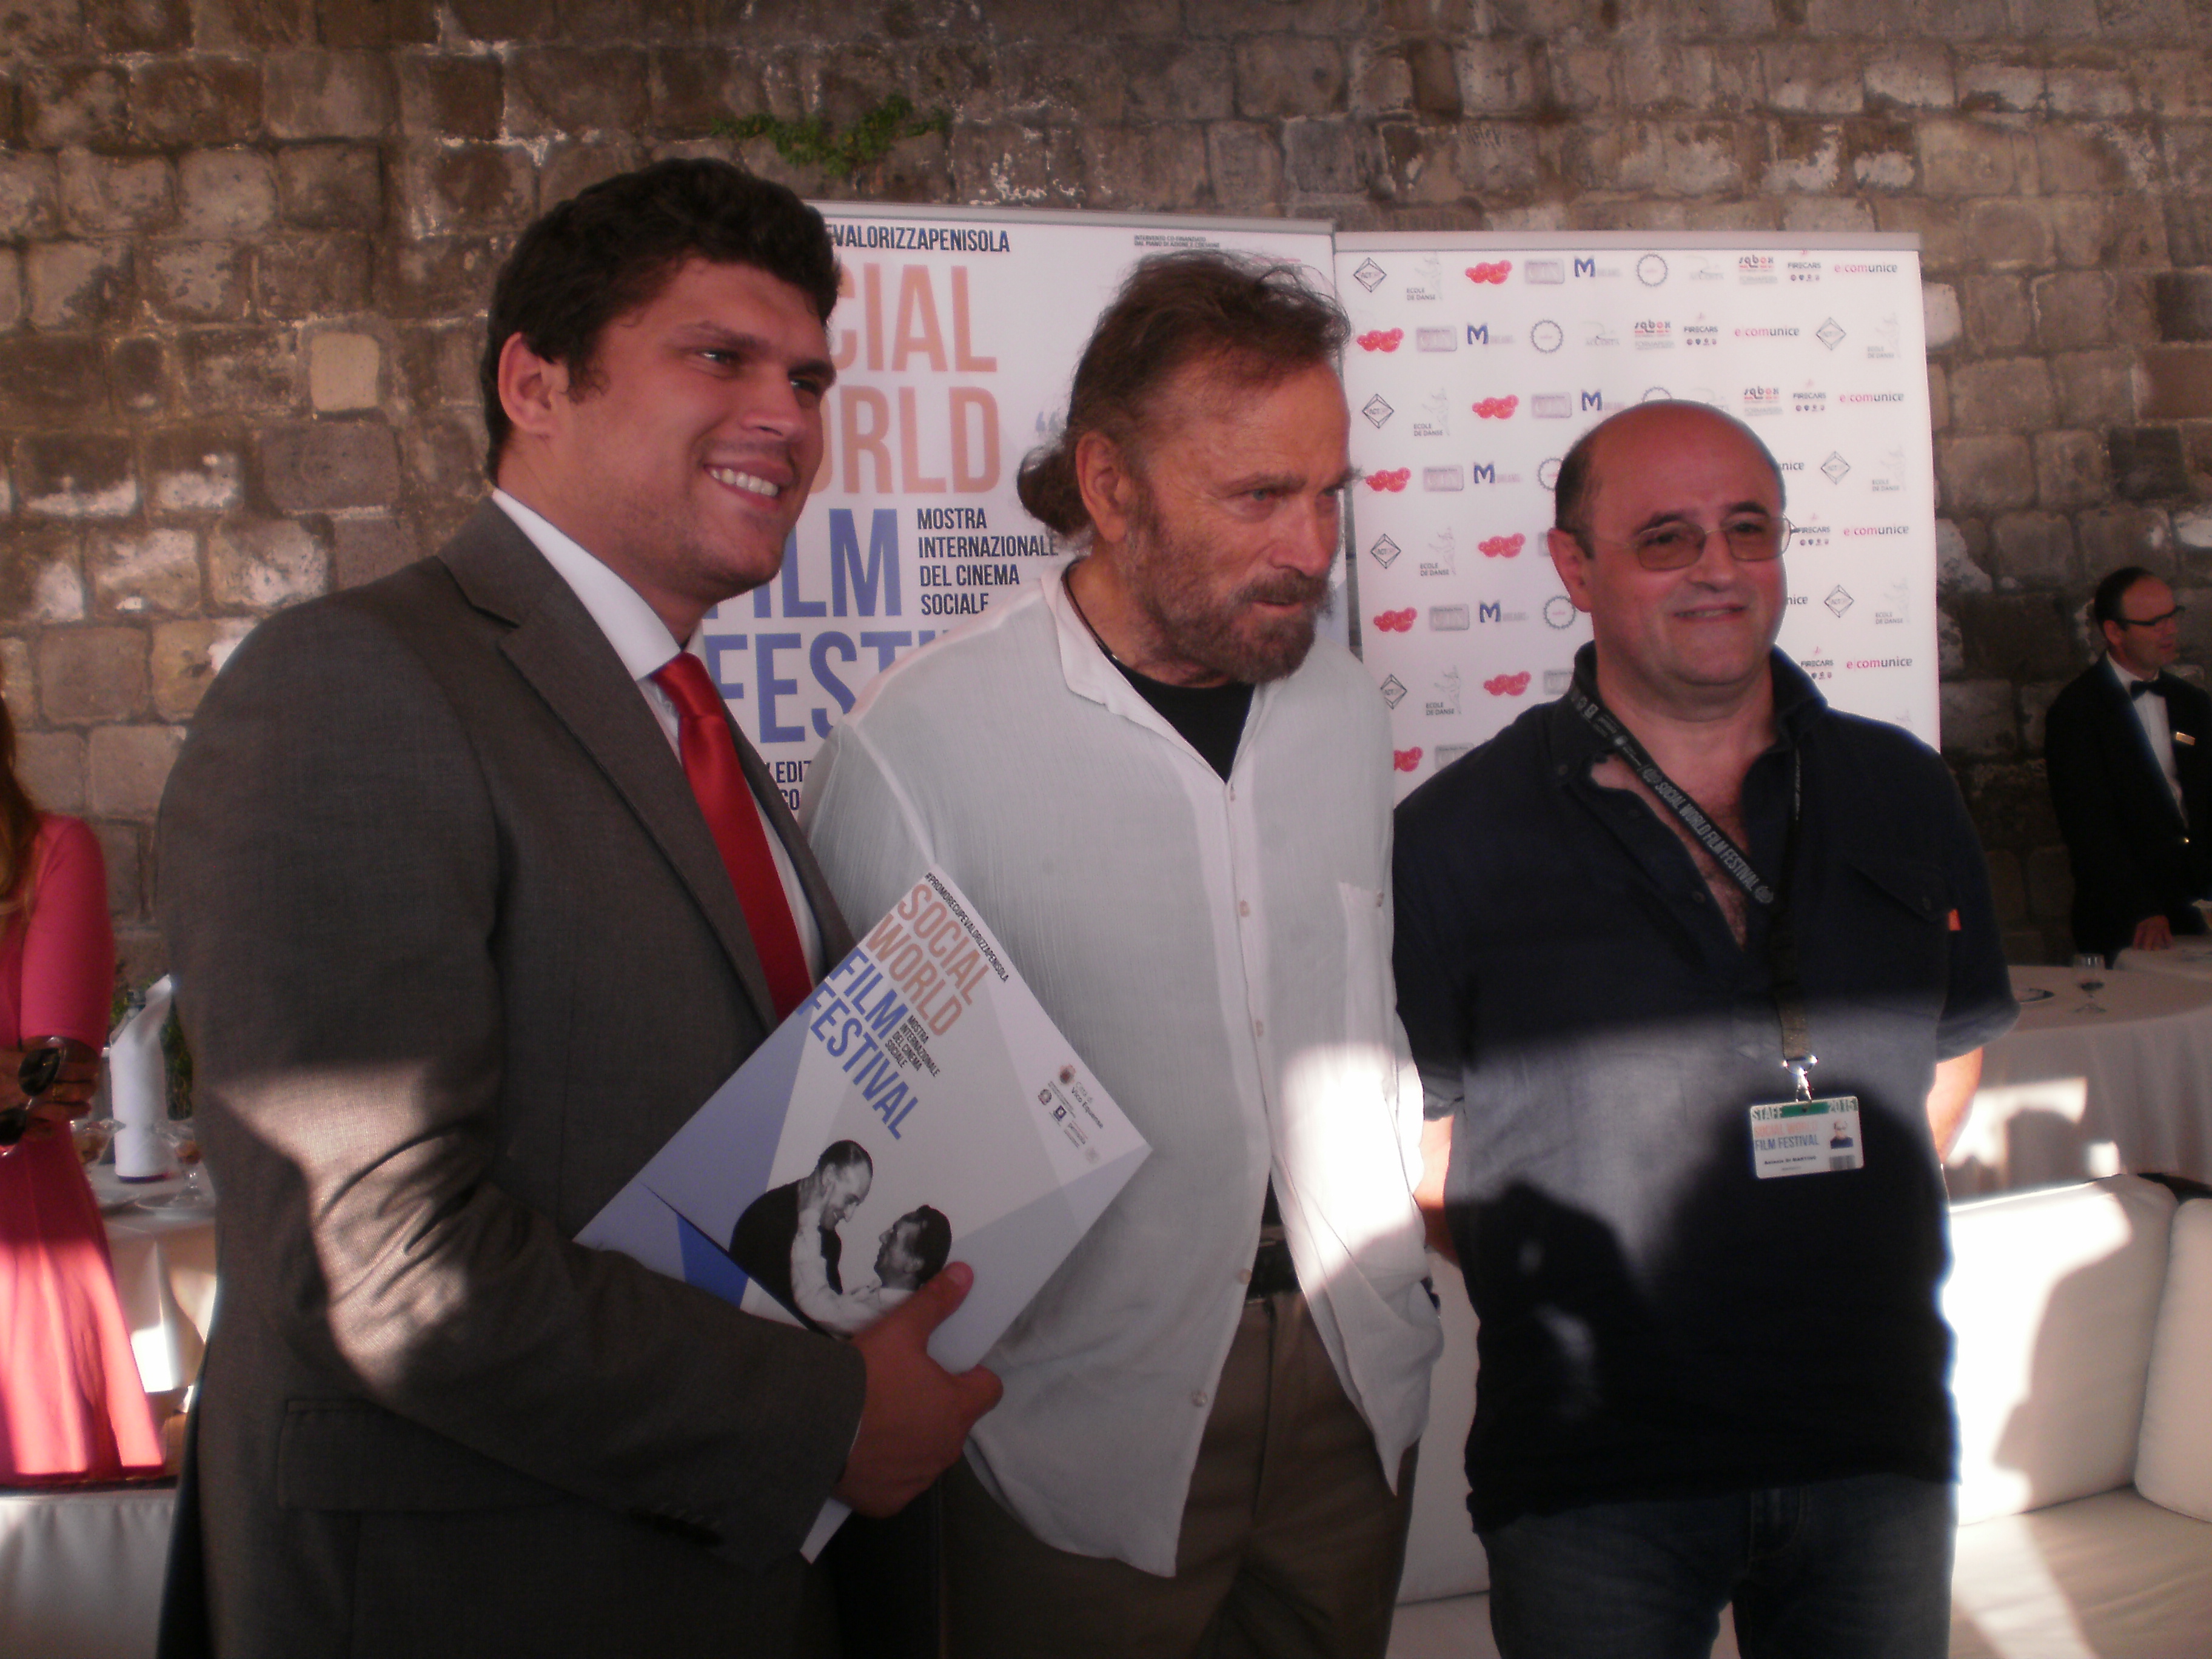 Franco Nero al Social World Film Festival.